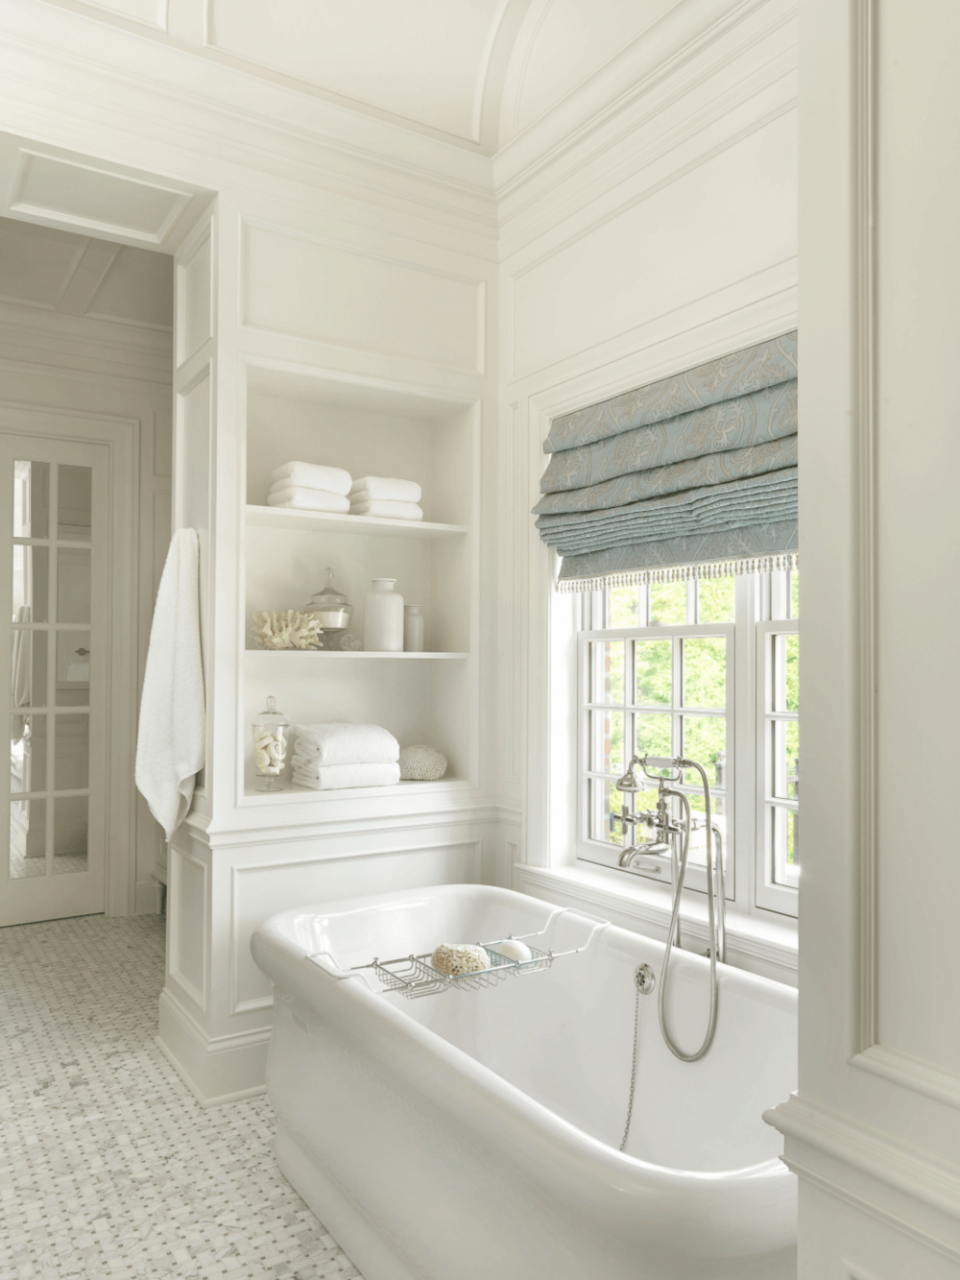 20 Amazing Bathroom Window Ideas that Will Inspire You David on Blog